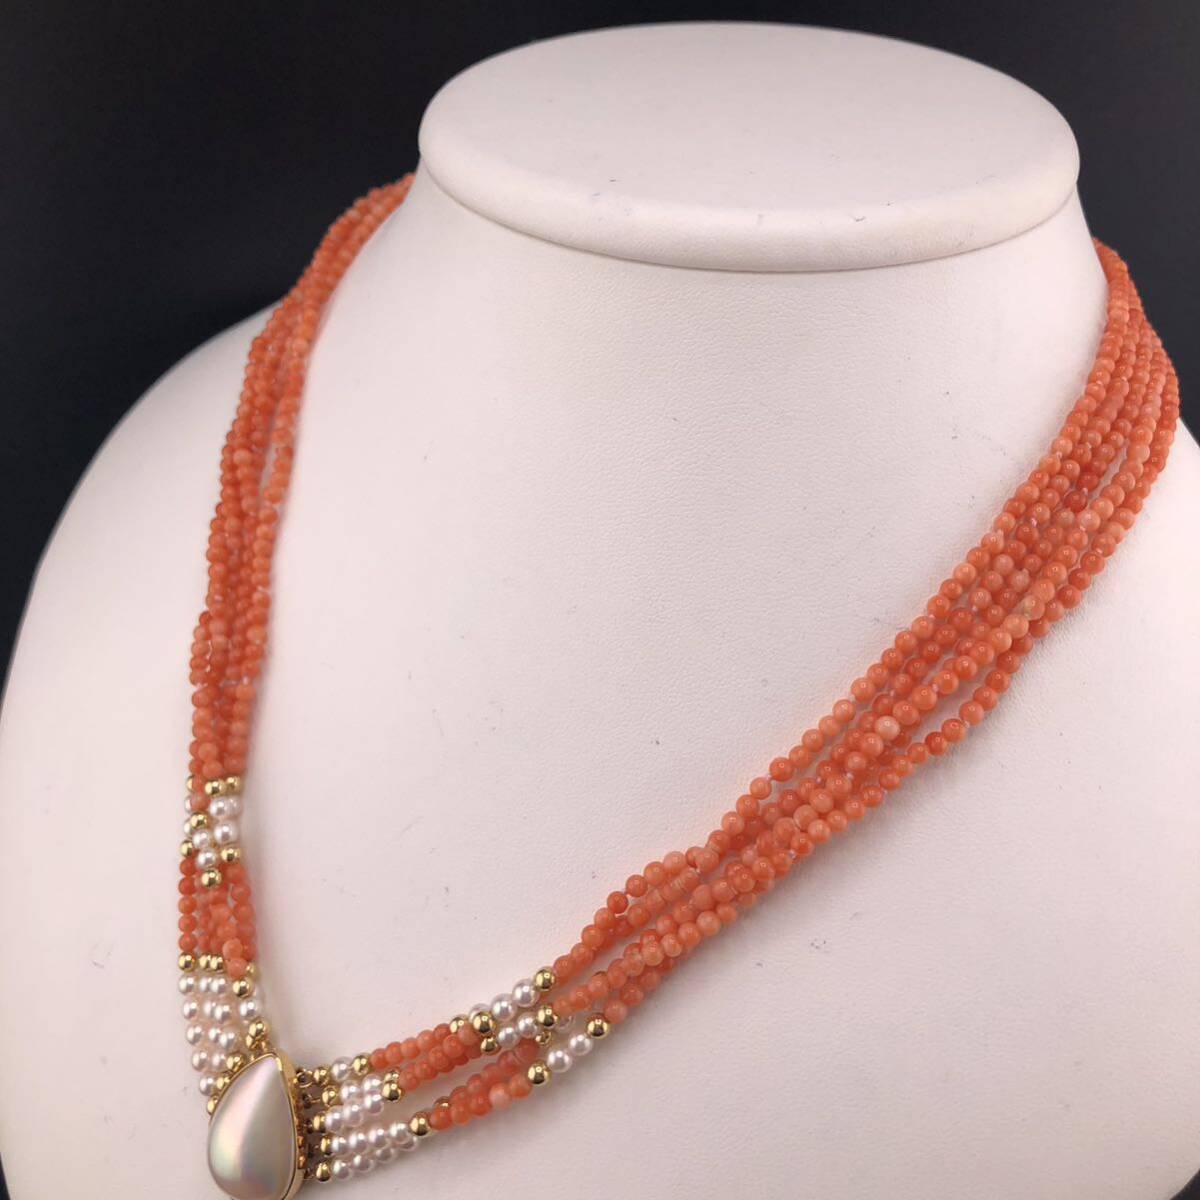 E04-4851 K18☆サンゴマベパールネックレス 5連 30.4g ( 珊瑚 マベ真珠 Pearl necklace accessory K18 K14 )の画像2